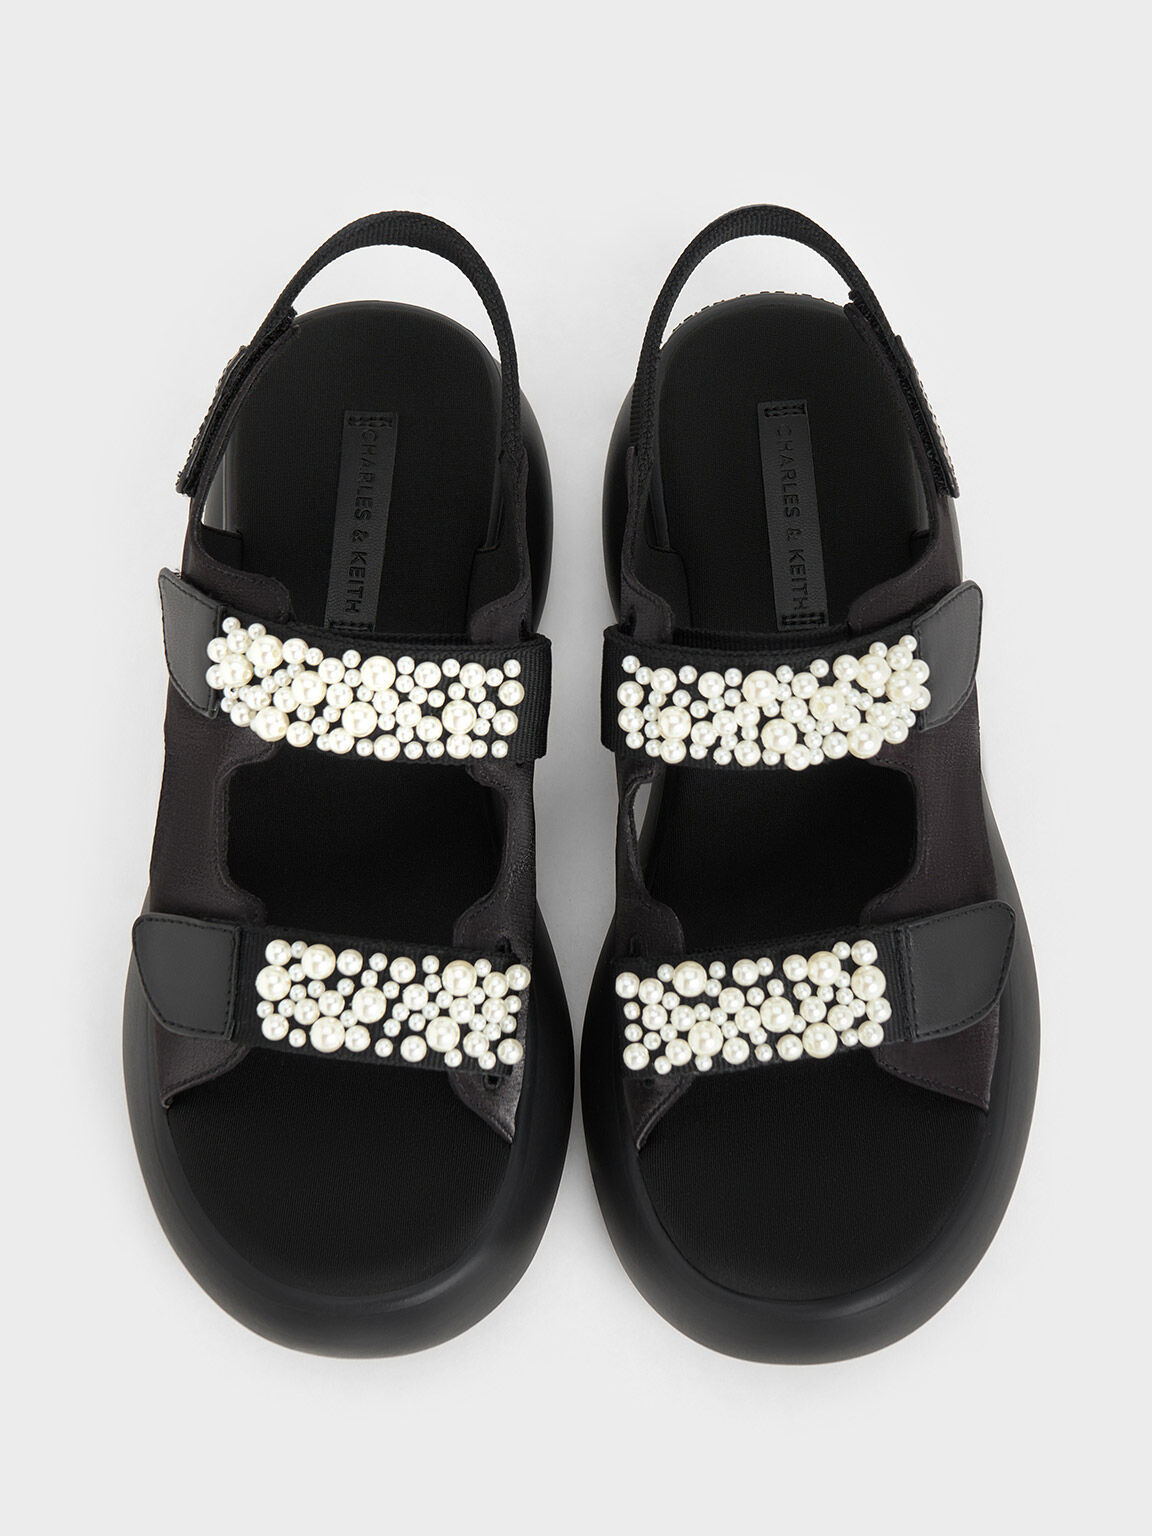 Beaded-Strap Sports Sandals, Black Textured, hi-res